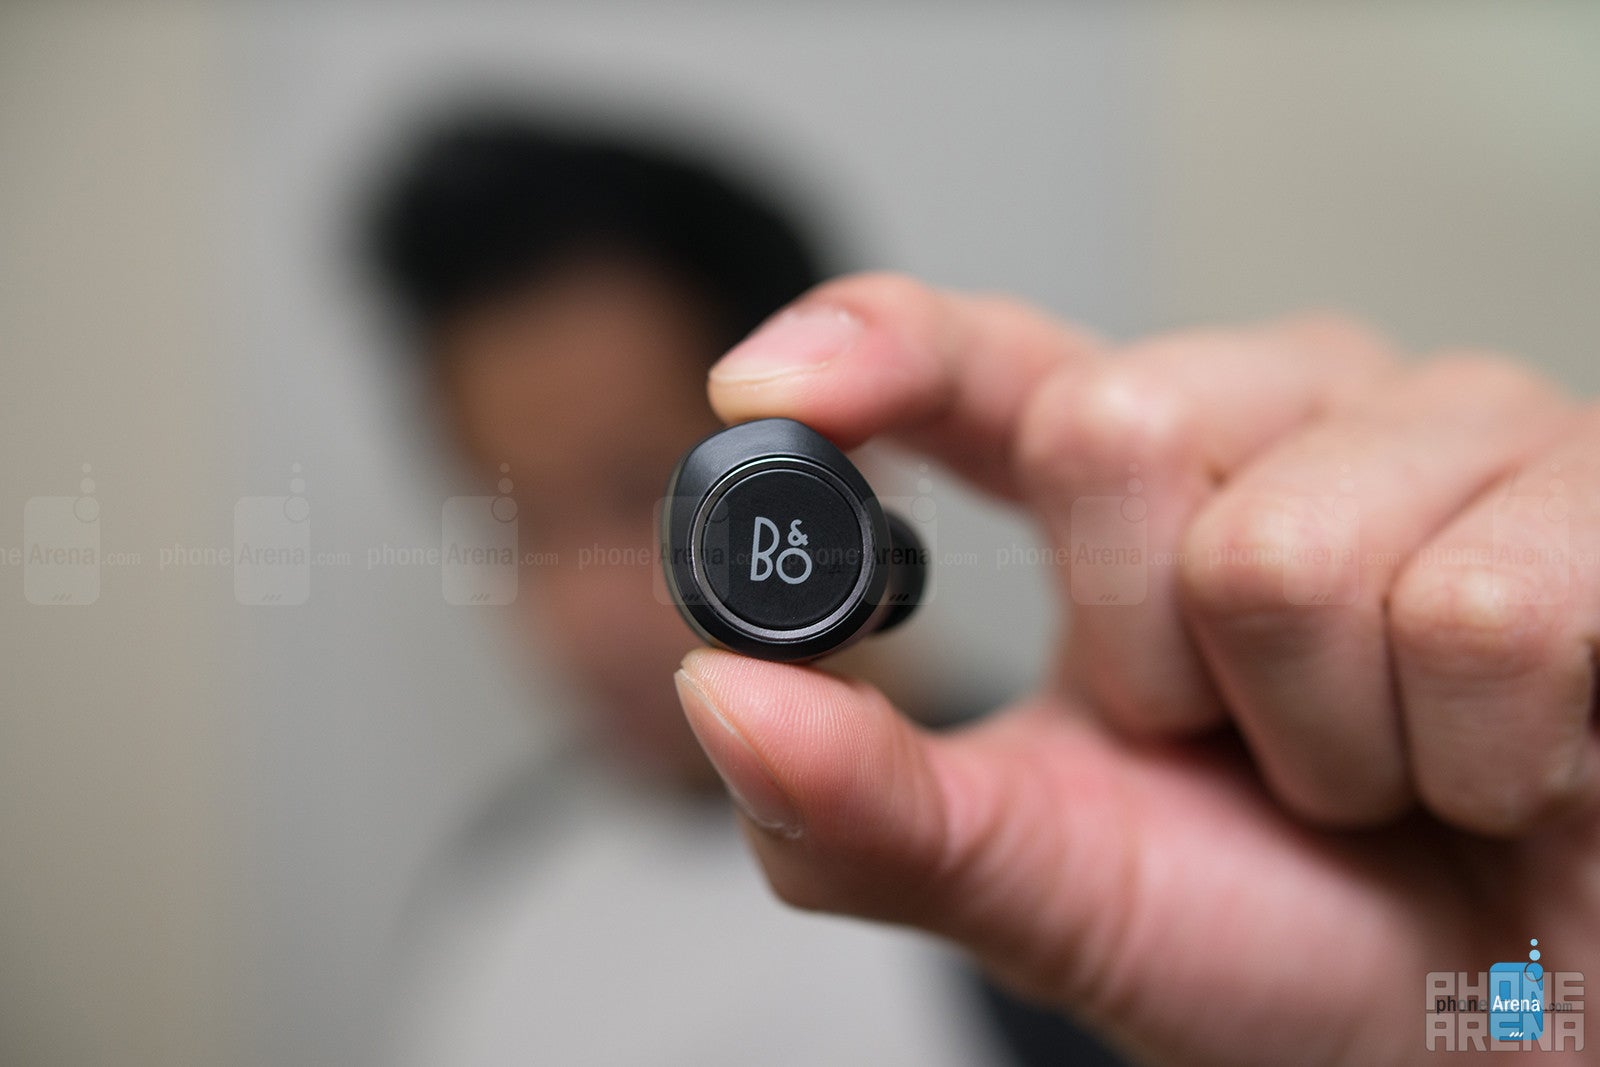 B&O Beoplay E8 Wireless Earphones Review